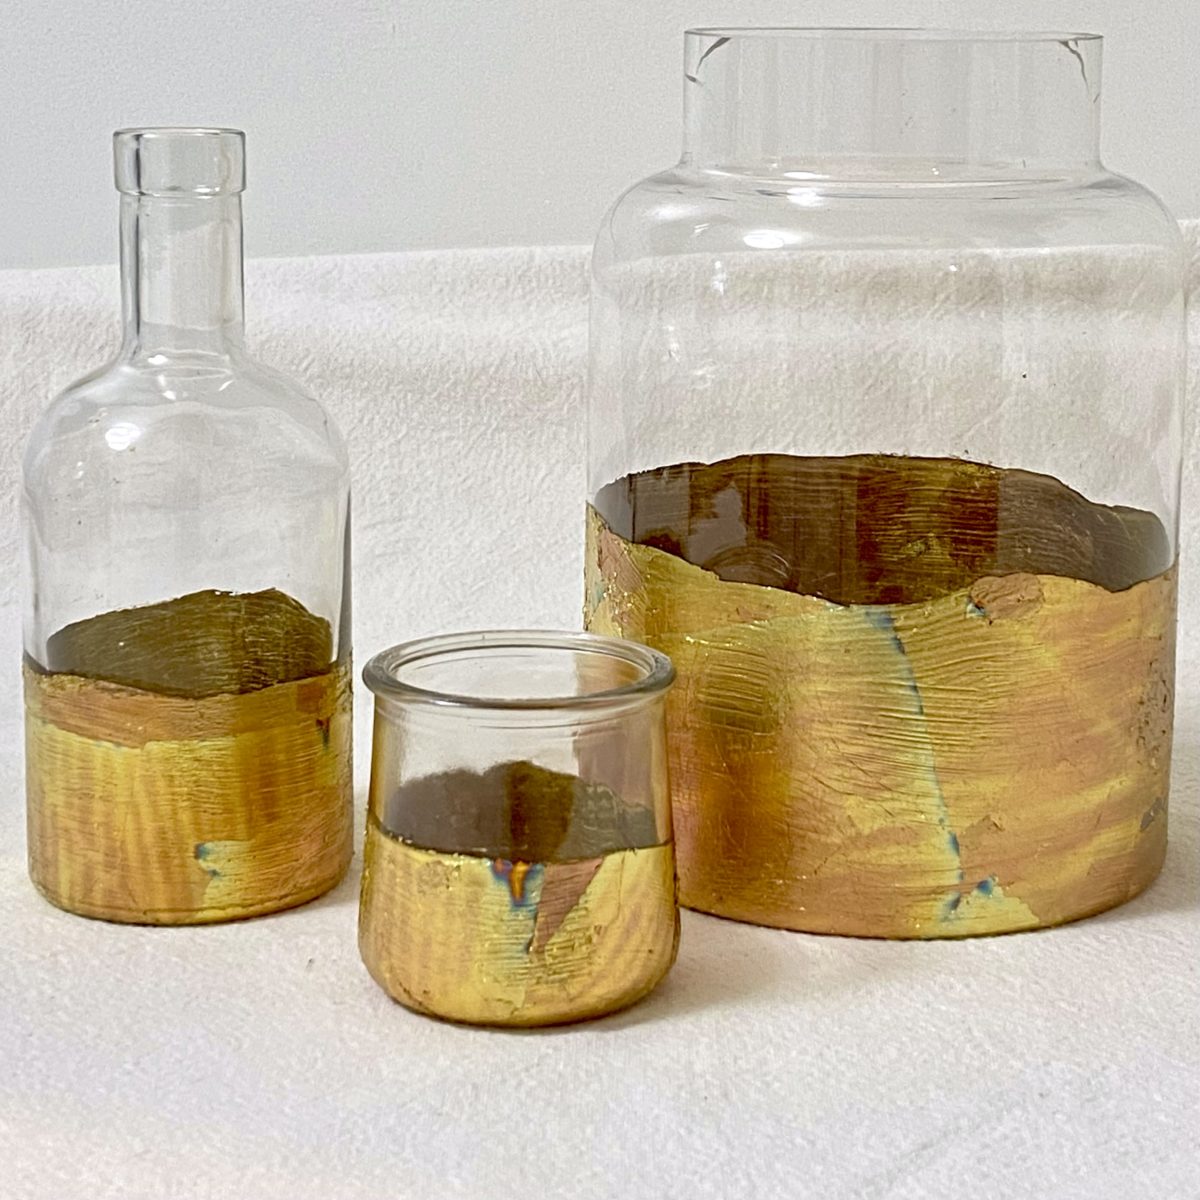 DIY gold leaf vases ready to be displayed.